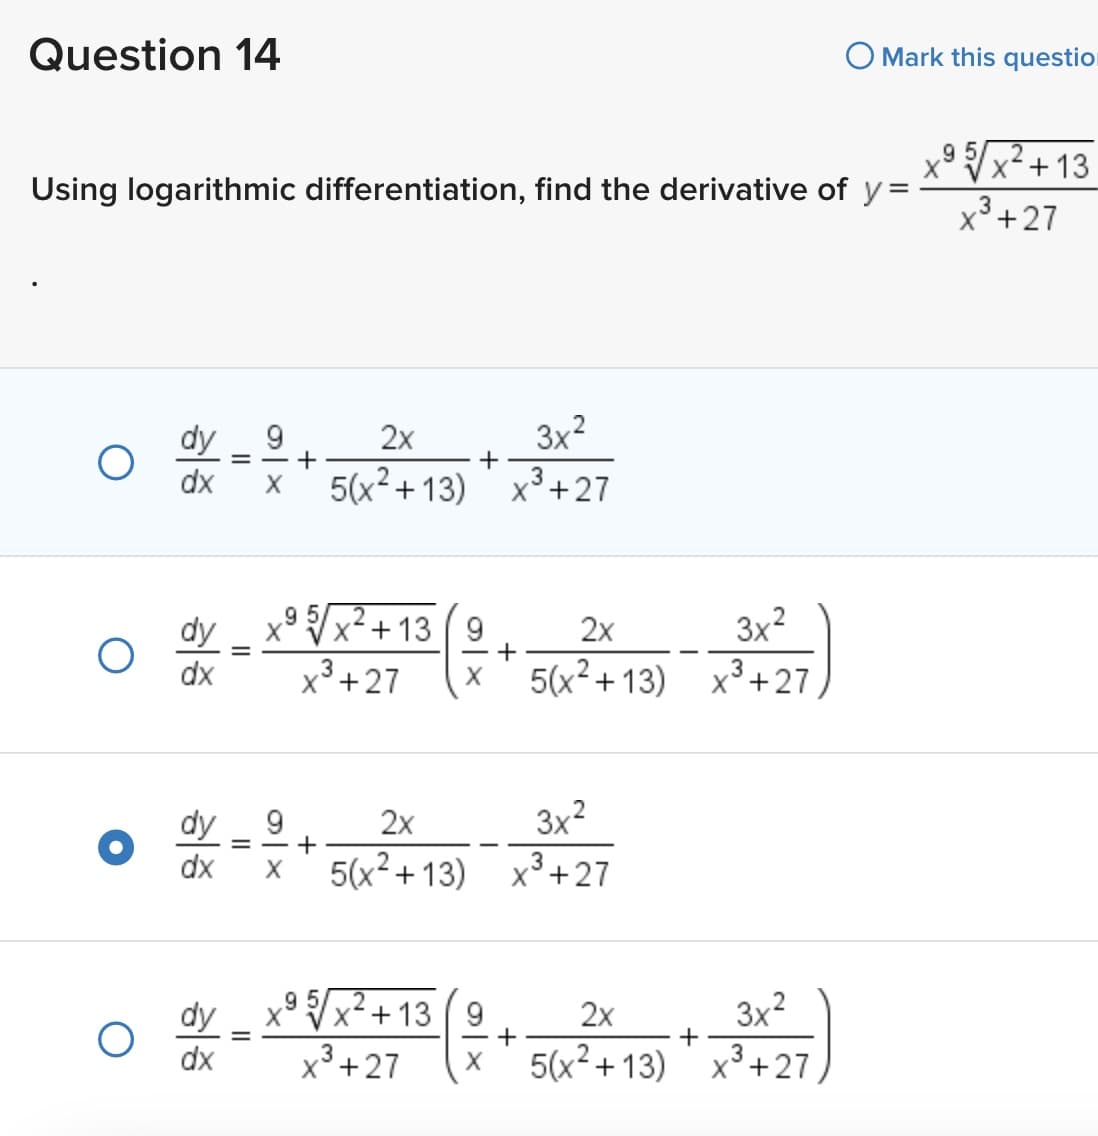 Question 14
Using logarithmic differentiation, find the derivative of y=
dx
9
== +
2x
5(x²+13)
9
• 2x - 2 +
dx
+
3x²
3
x³ +27
95
x+139
2x
3x²
0 0 - 05/27-13 (2+52 +13) - 3427)
dy
dx
x³+27
5(x²+13) x³+27
2x
3x²
5(x²+13) x³+27
Mark this question
95
0 or X²5X²2=13 (2+ - 2 + 15) + 232427)
dy
2x
3x²
=
dx x³+27
5(x²+13) x³+27
95/
x+13
x³+27